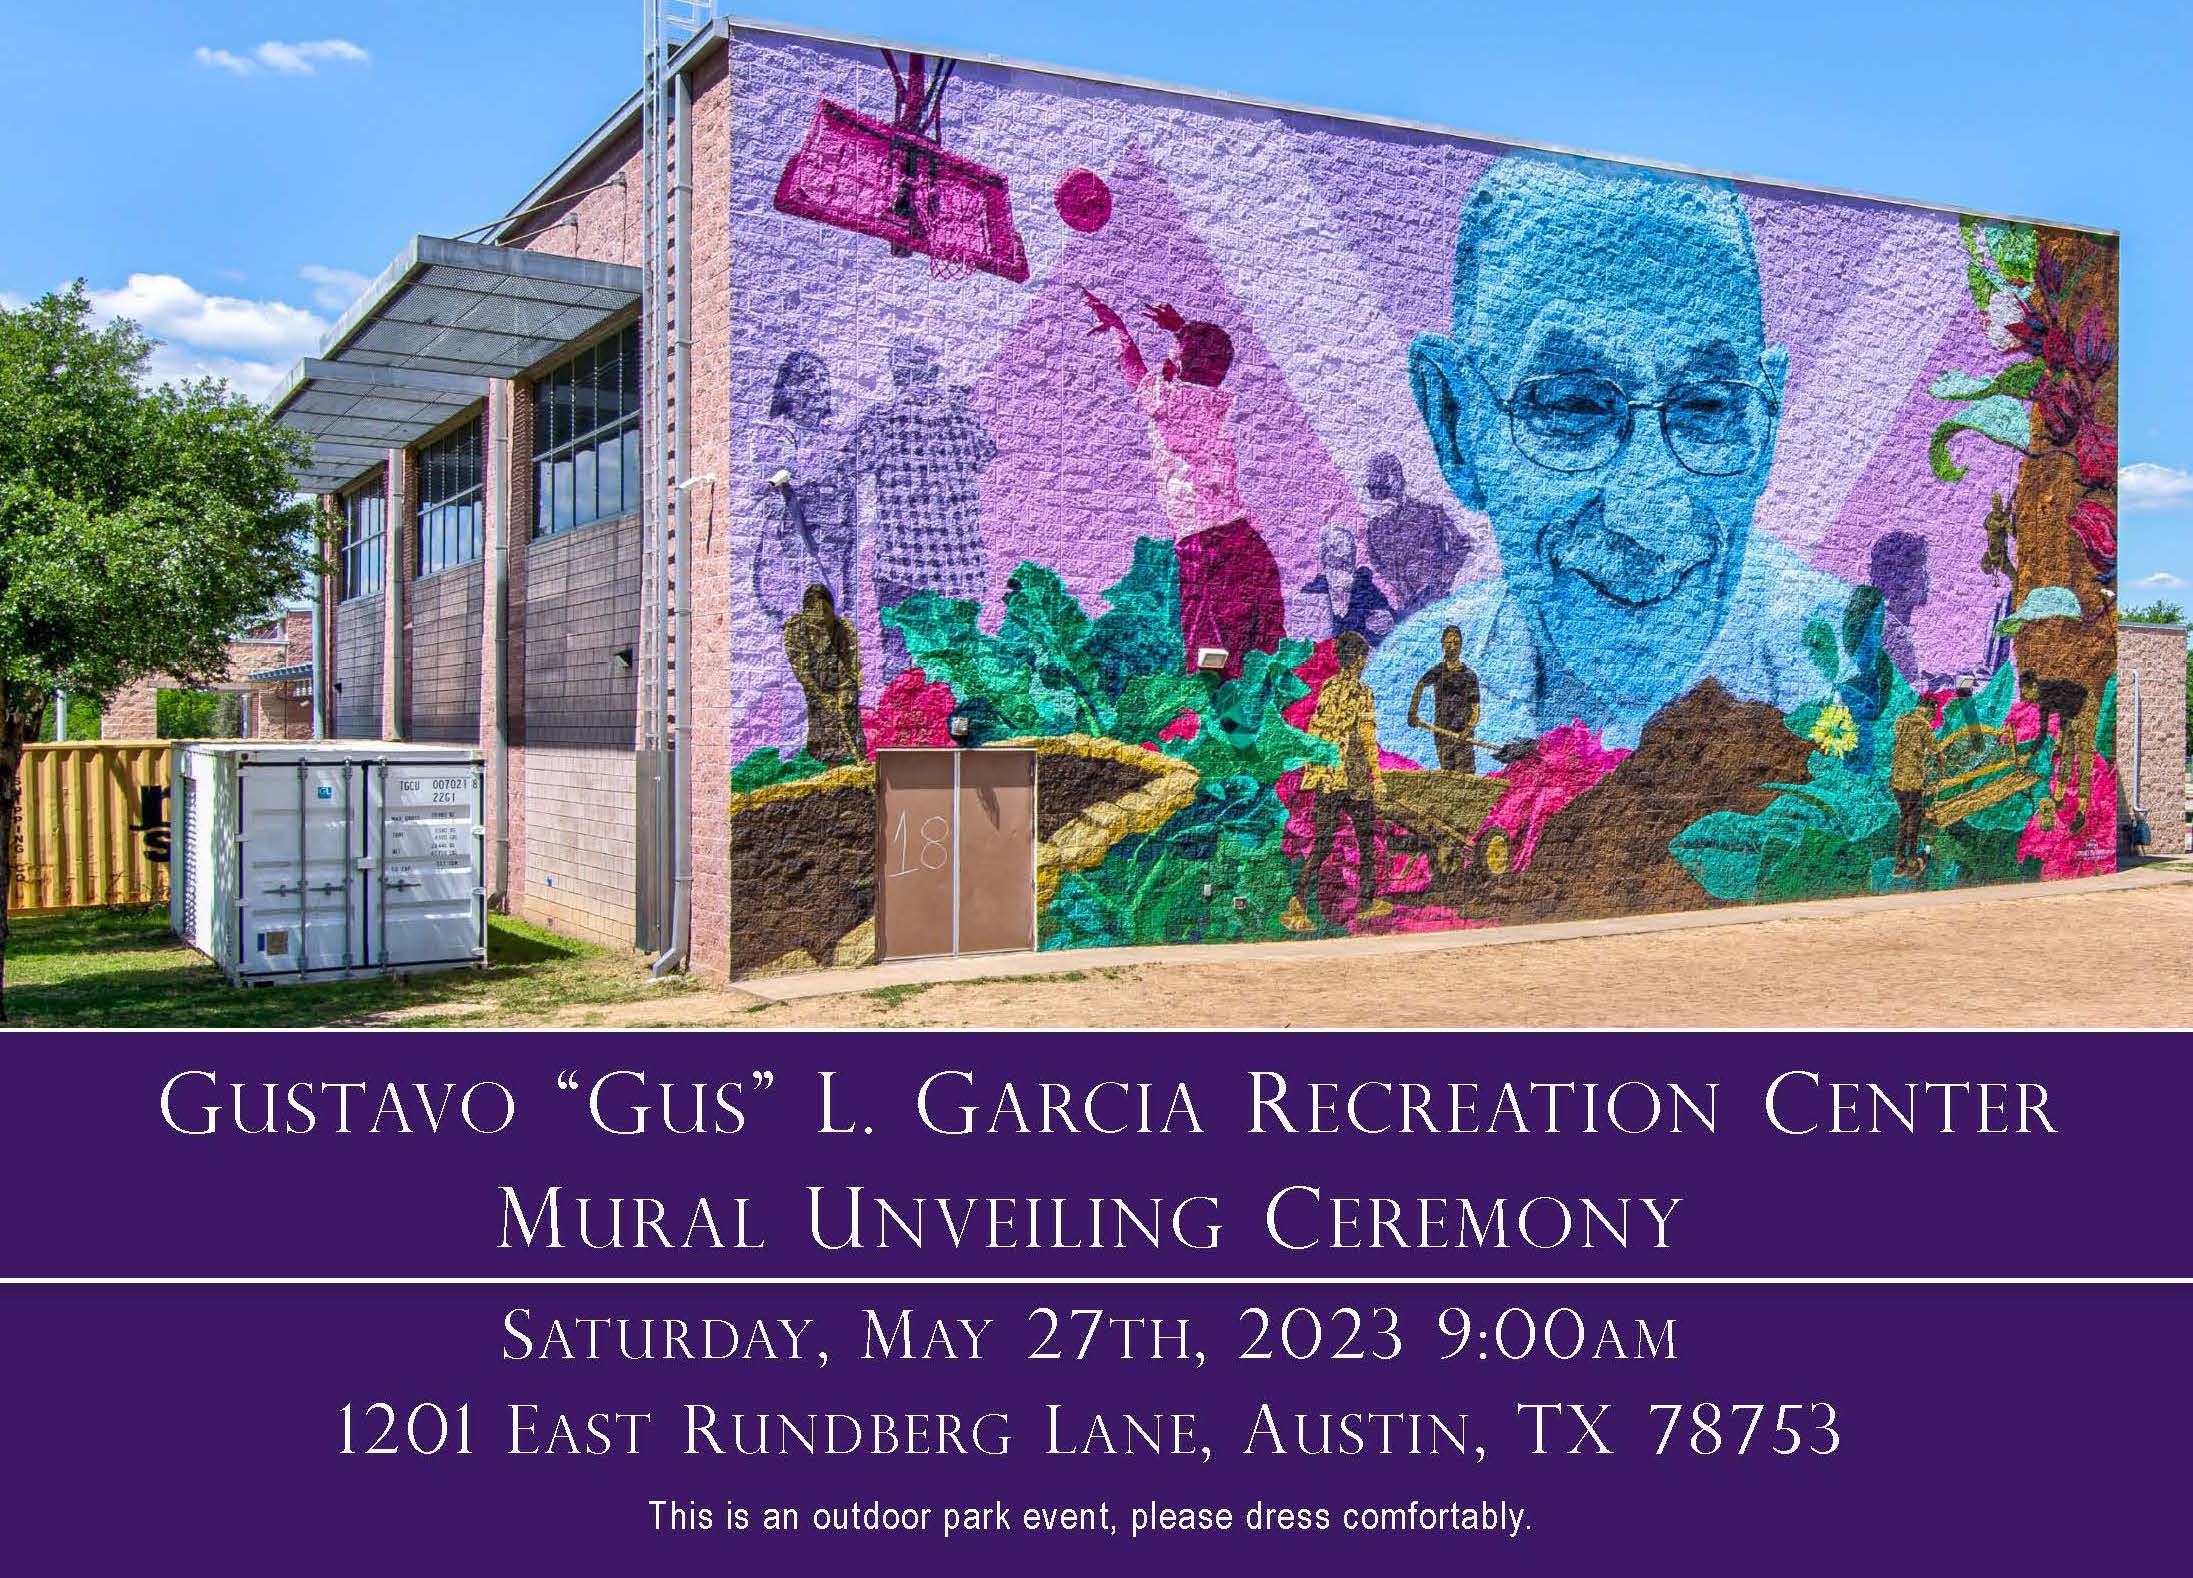 Gustavo "Gus" L. Garcia Recreation Center Mural Unveiling Ceremony